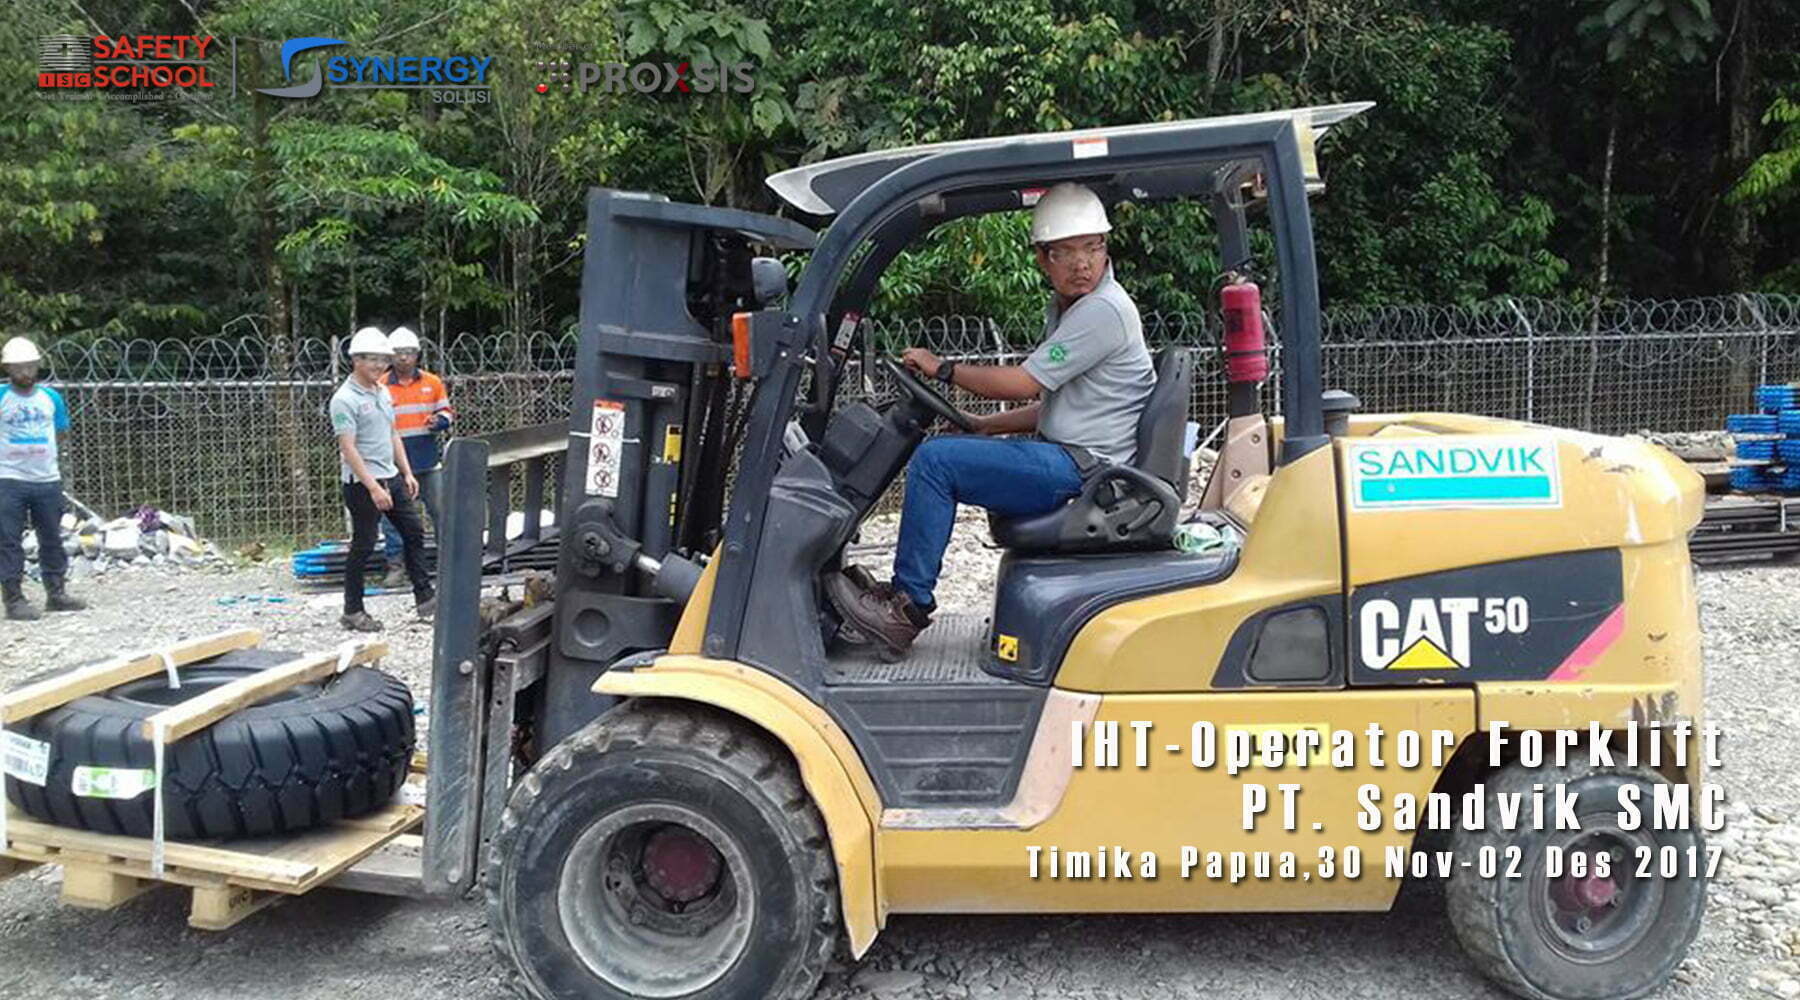 Inhouse Training Operator Forklift PT Sandvik SMC Timika Papua